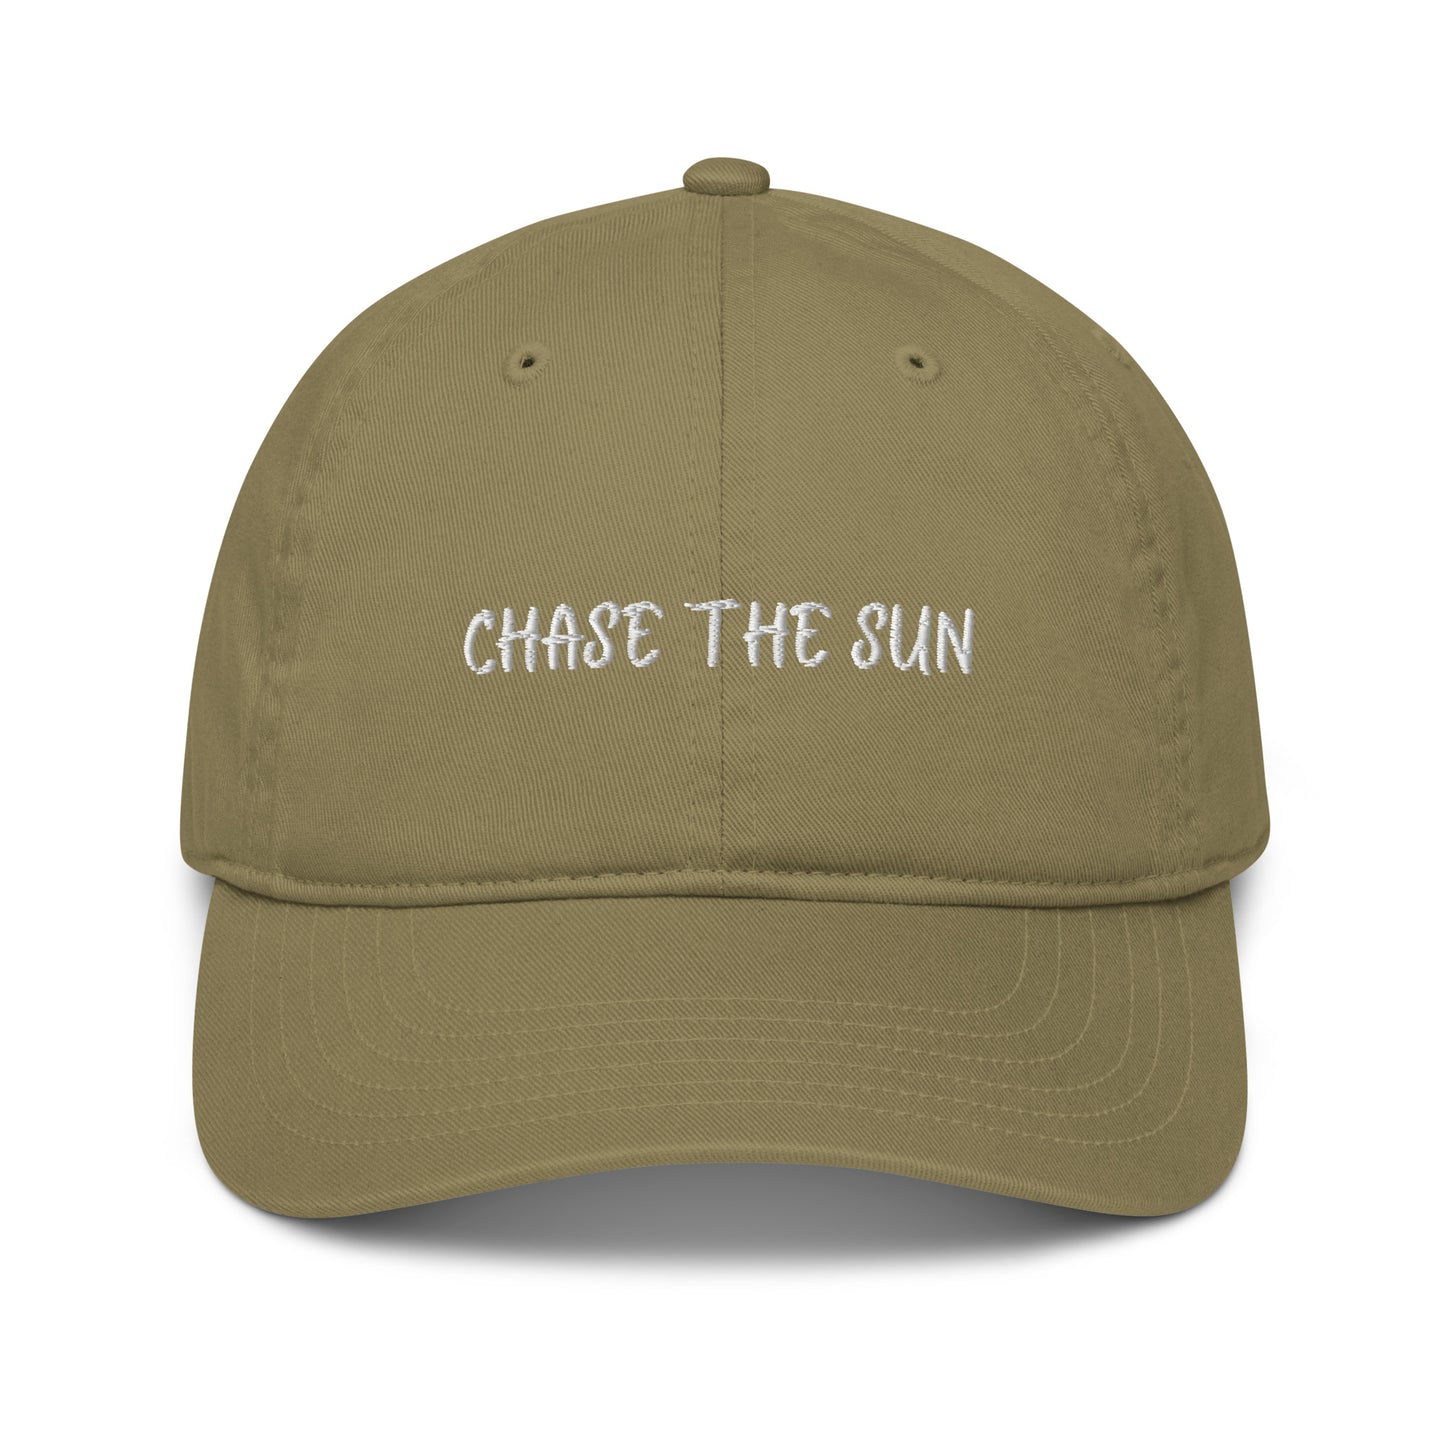 Chase The Sun Organic Hat - Khaki Front